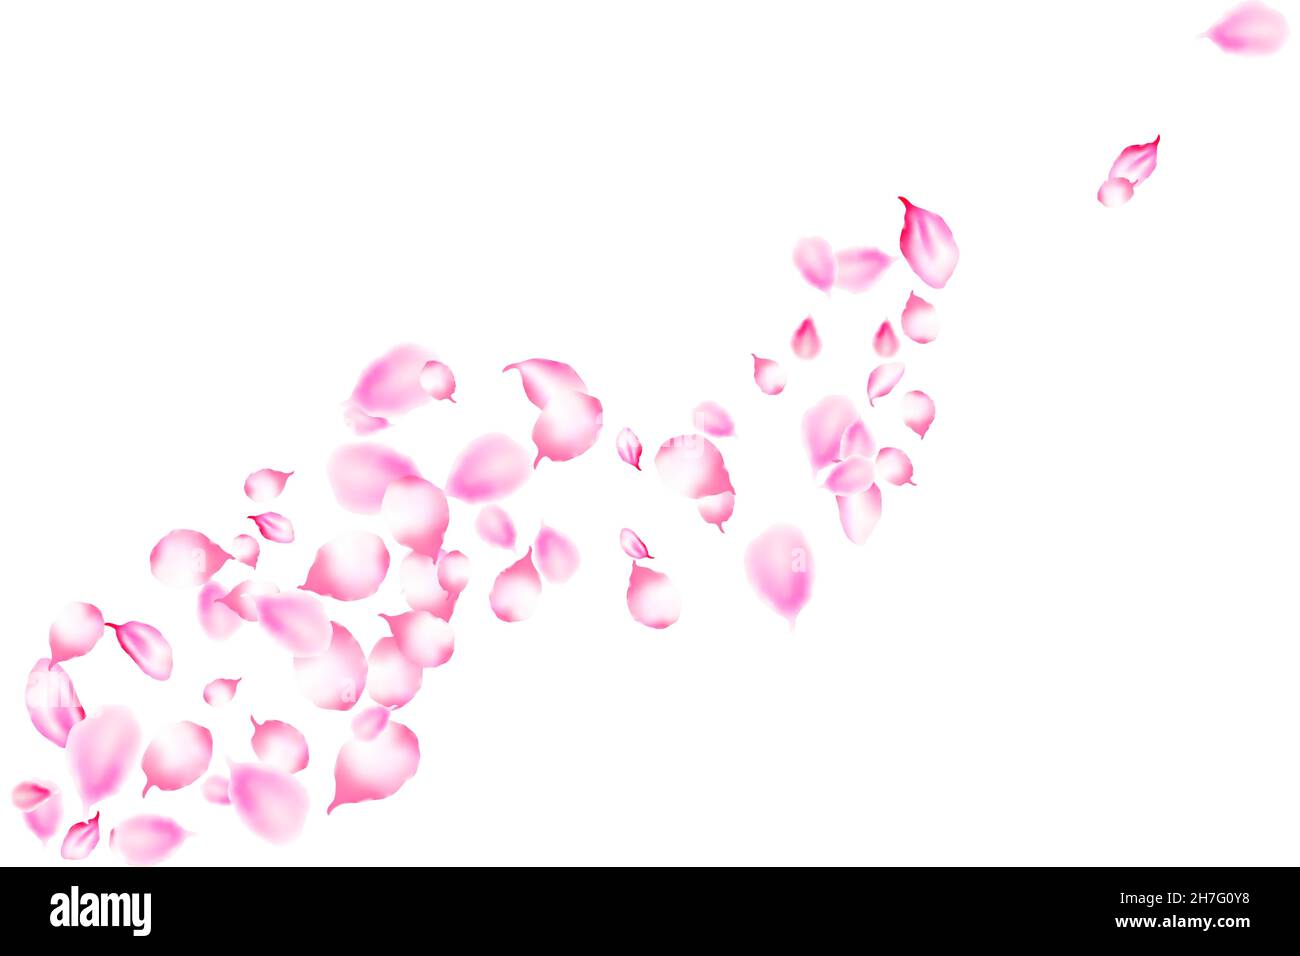 4. Sakura Hauno Nail Color in "Petals and Pink" shade - wide 10